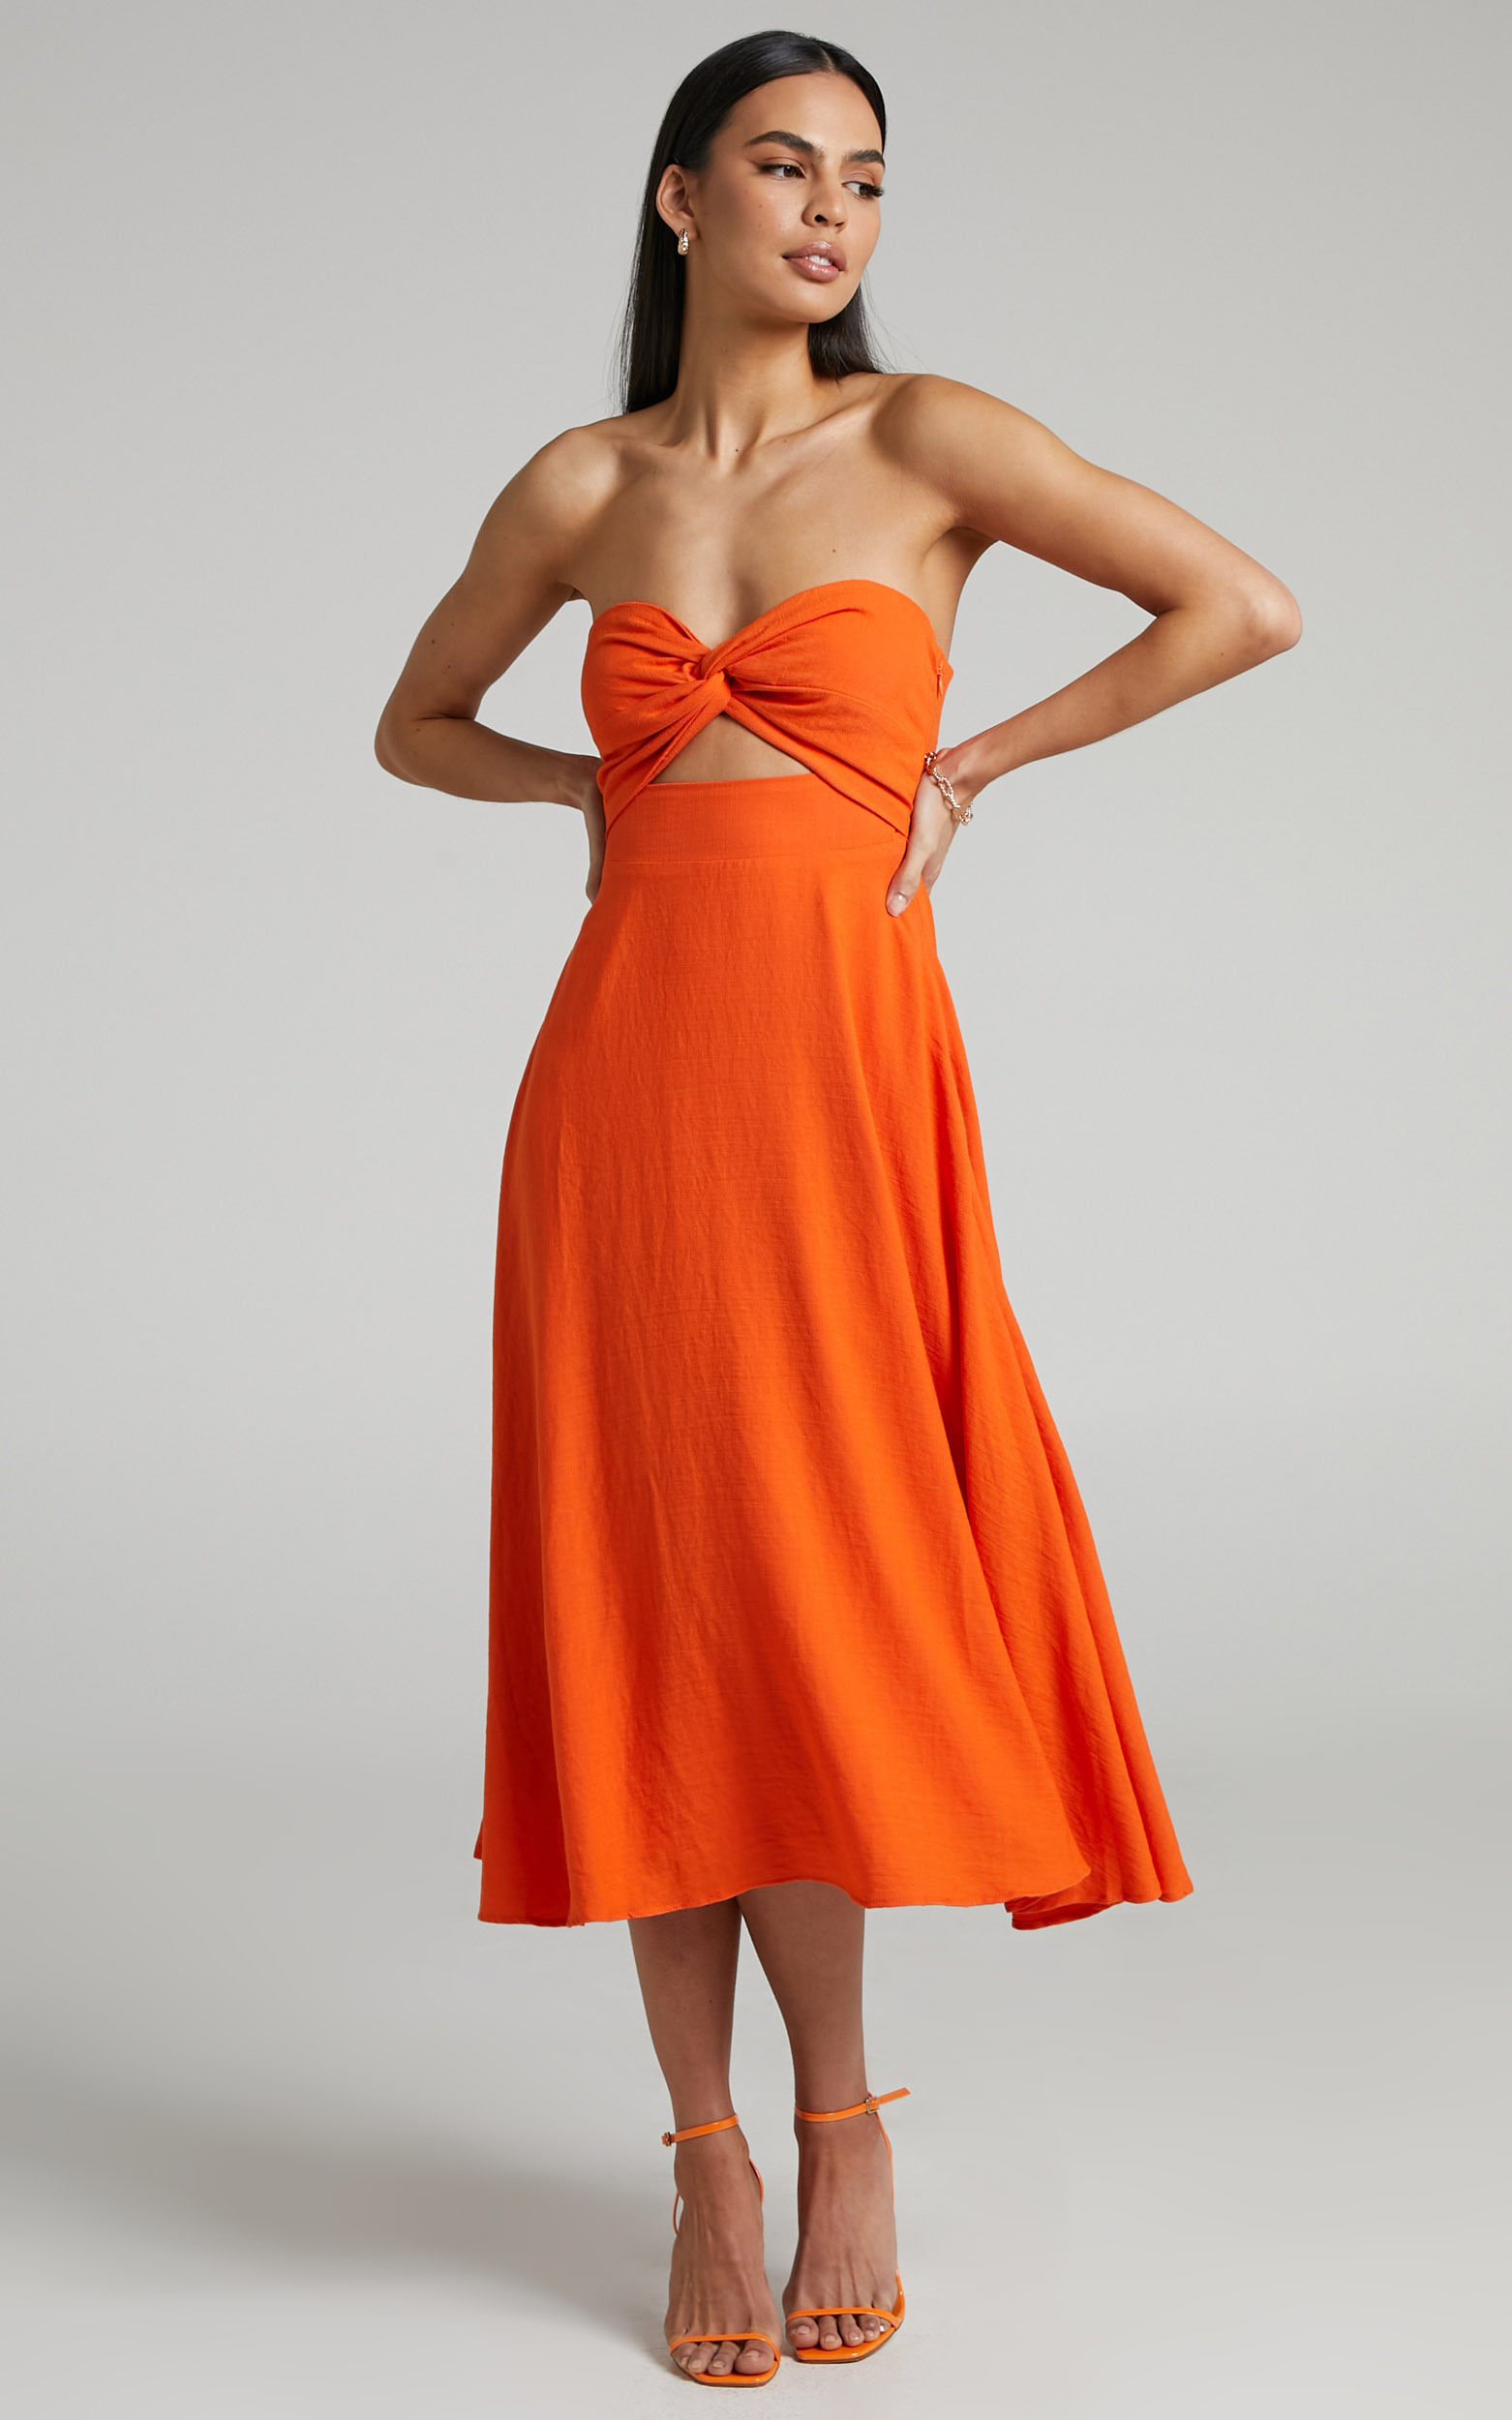 Avie Twist Strapless Cocktail Dress in Orange - 06, ORG1, hi-res image number null